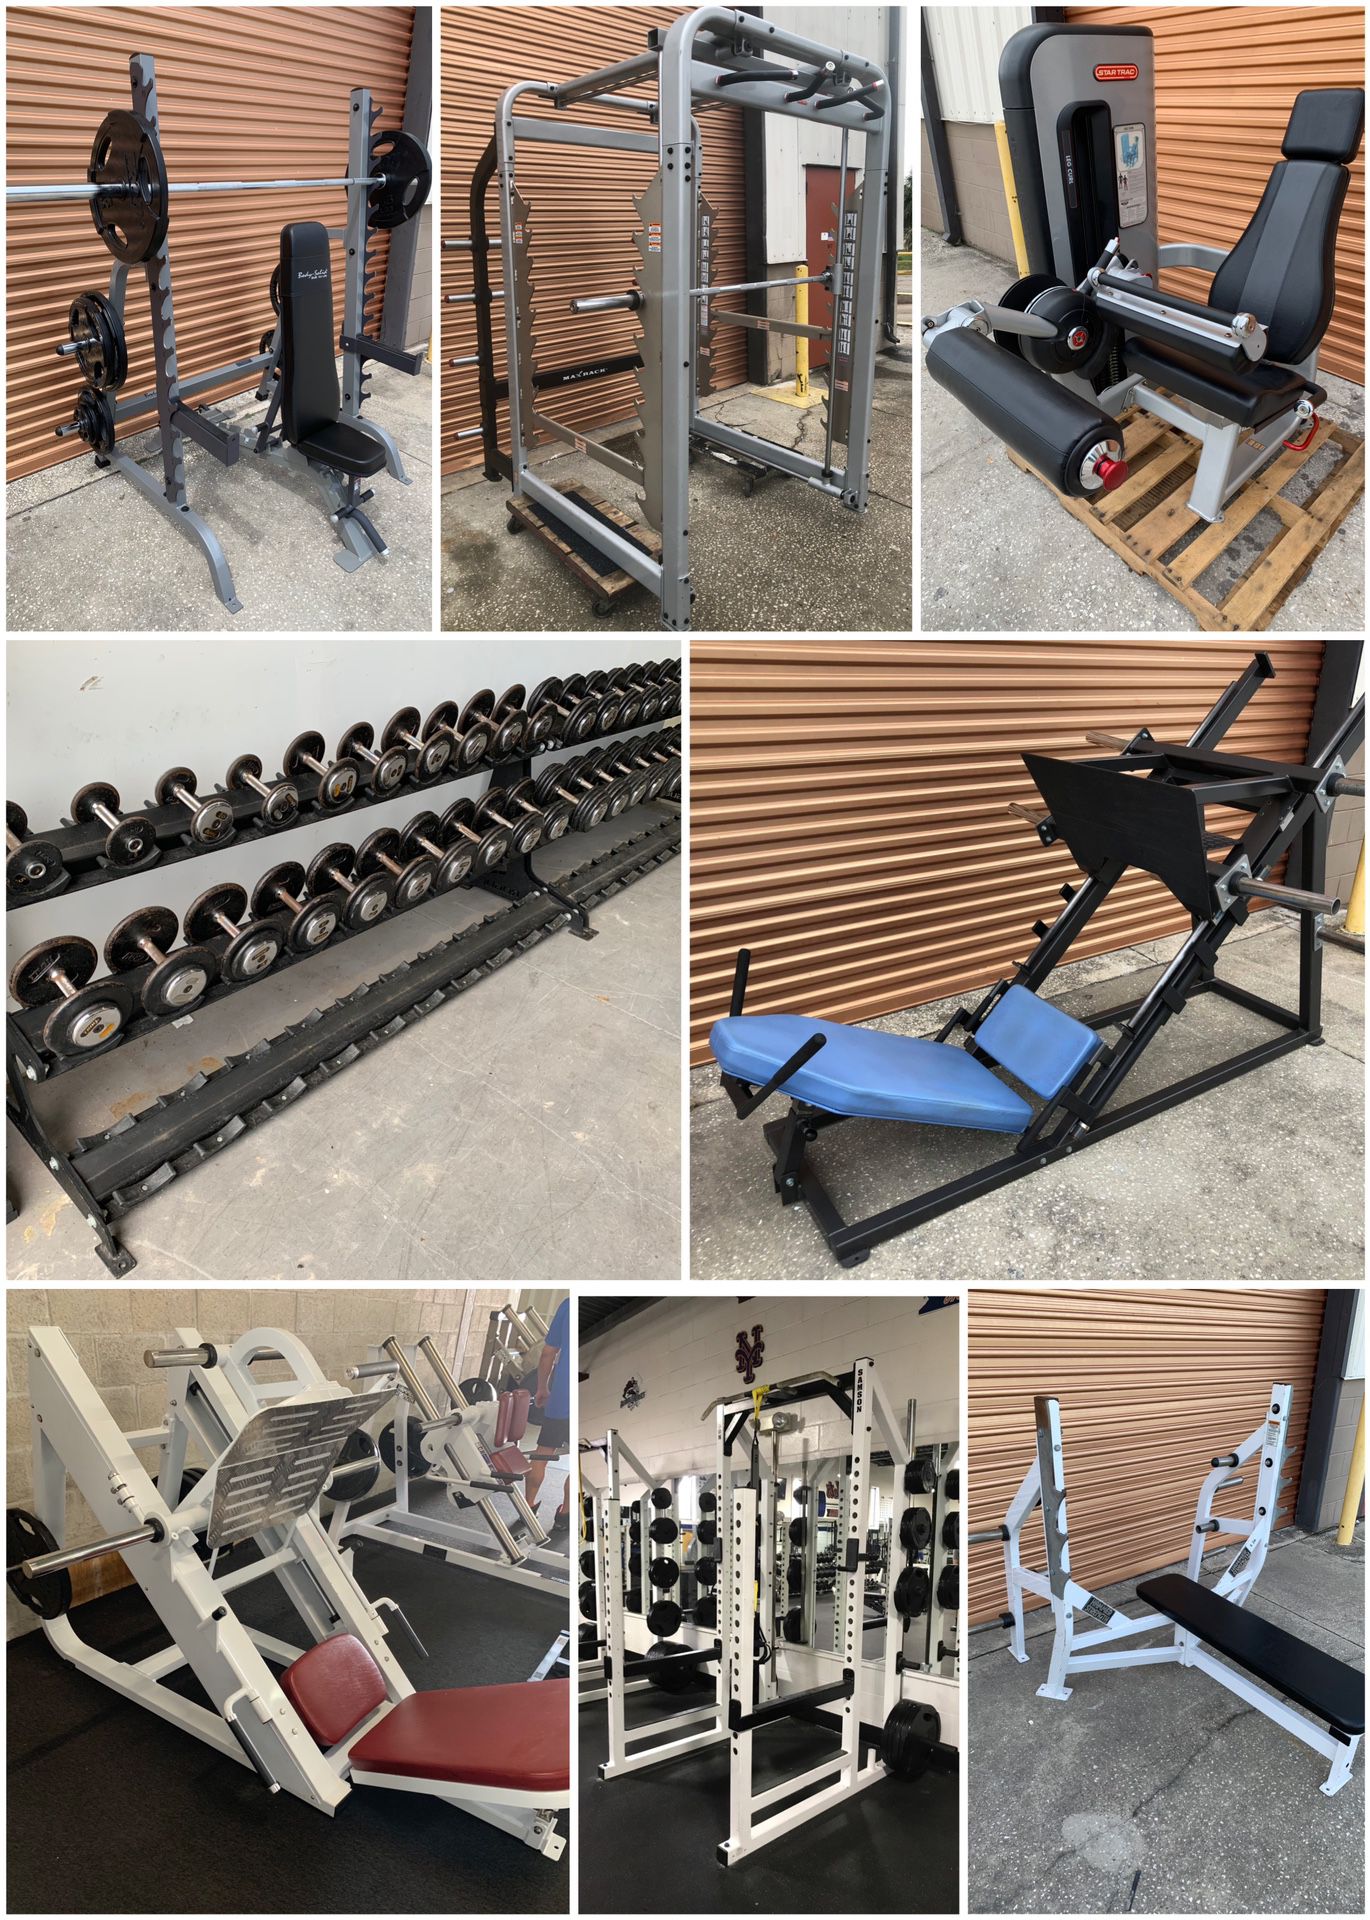 Davenport Fitness Equipment- Smith Machines, Olympic Squat Racks, Leg Press, Dumbbells, Weight Benches Plates